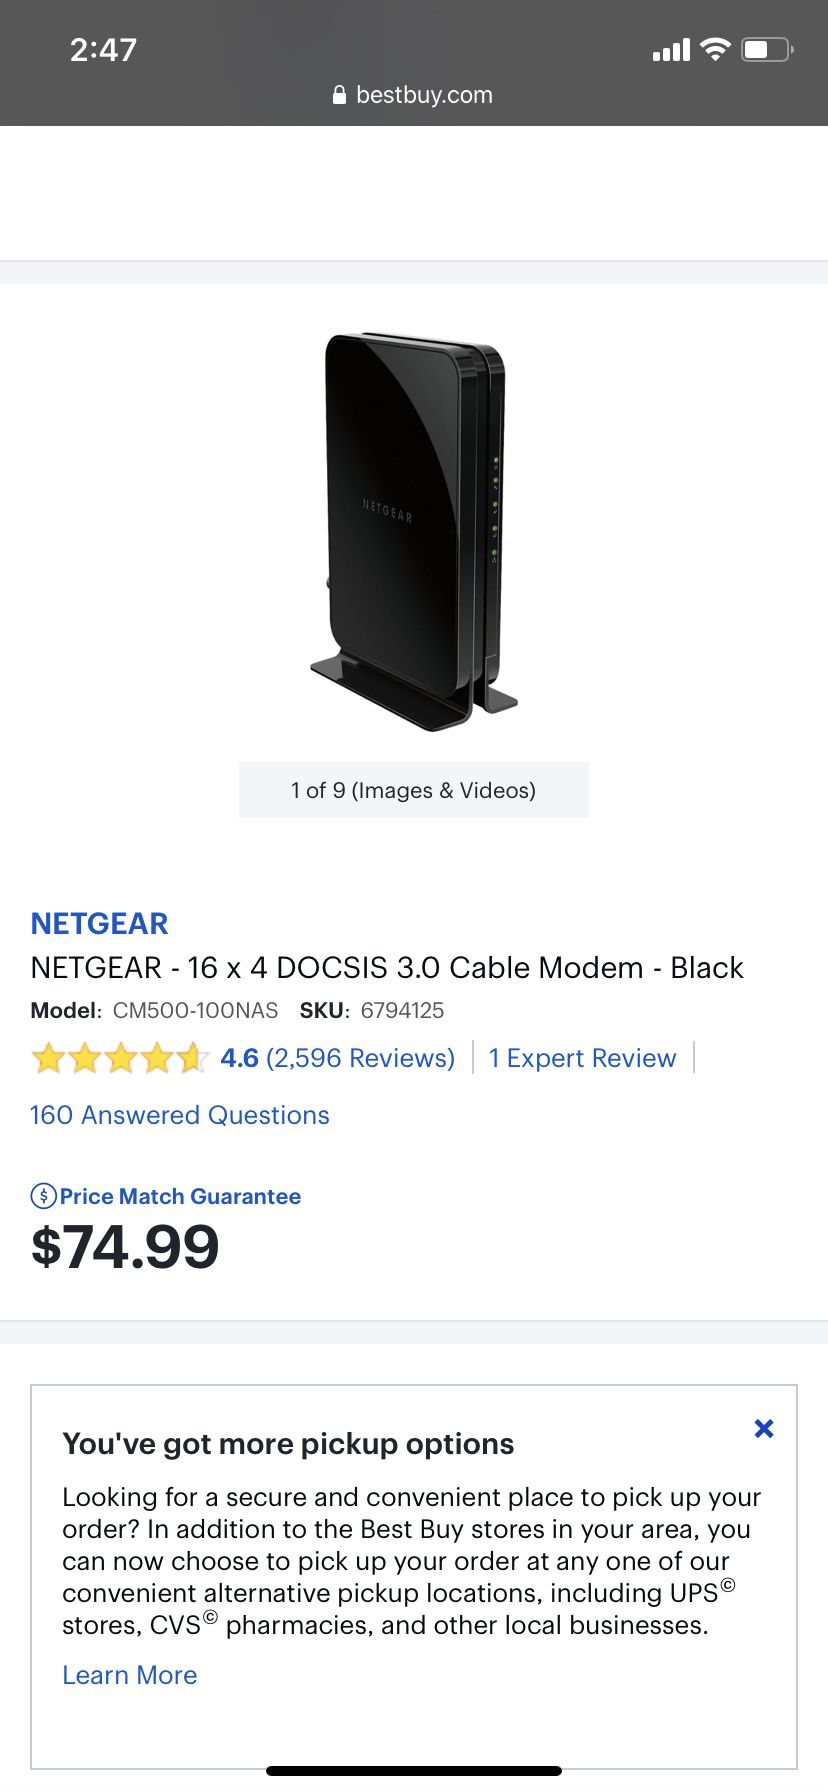 Netgear cable modem model No. CM500